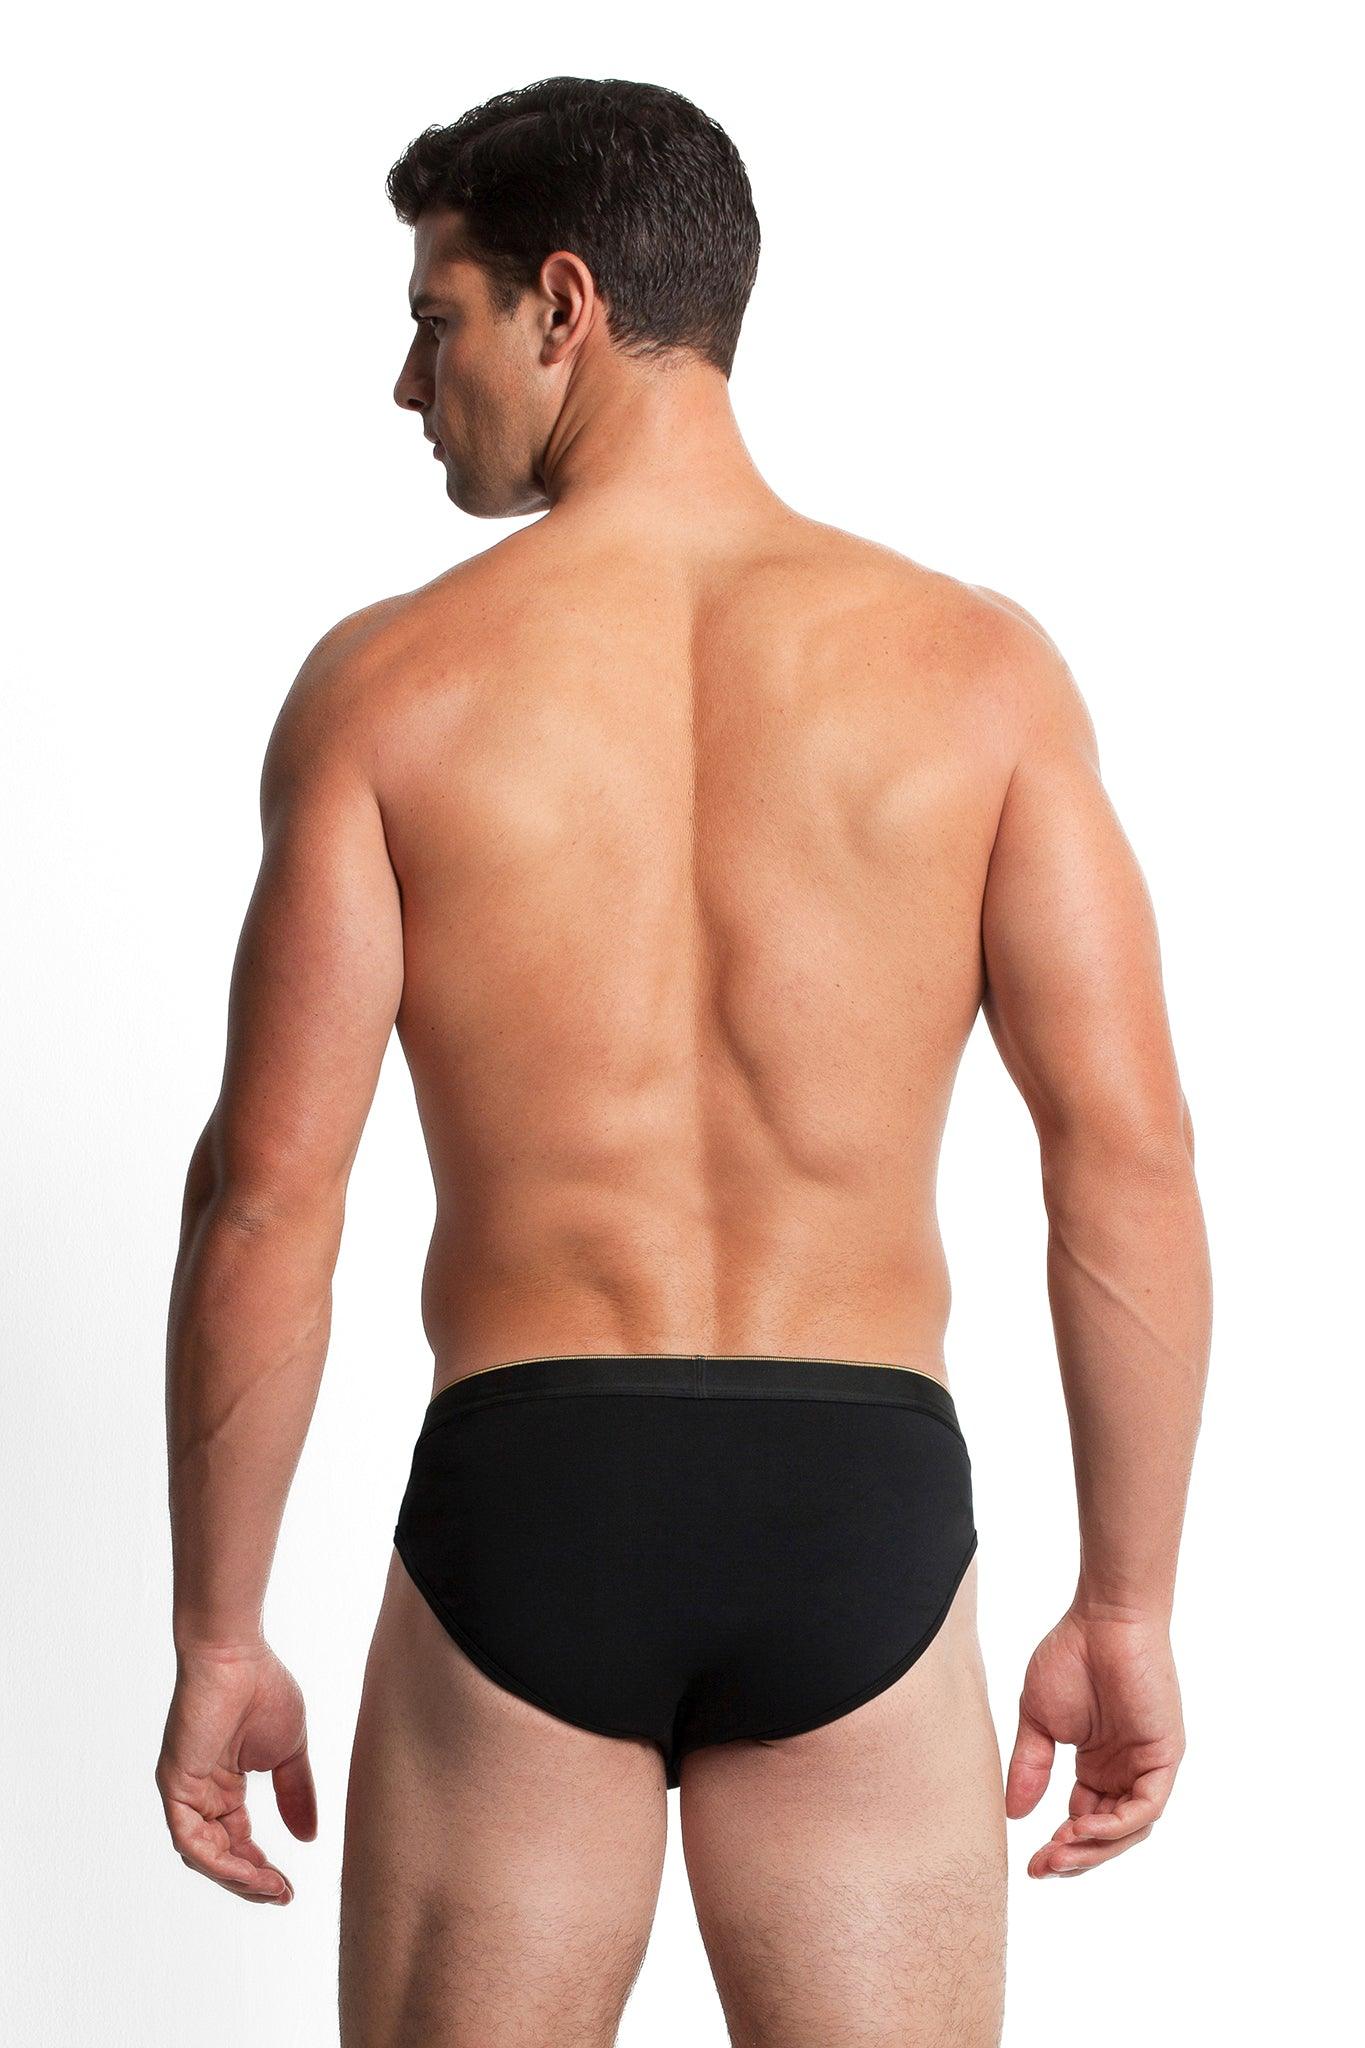 SALIGIA Men's Underwear & Clothes-Contemporary Style, Designed To Last